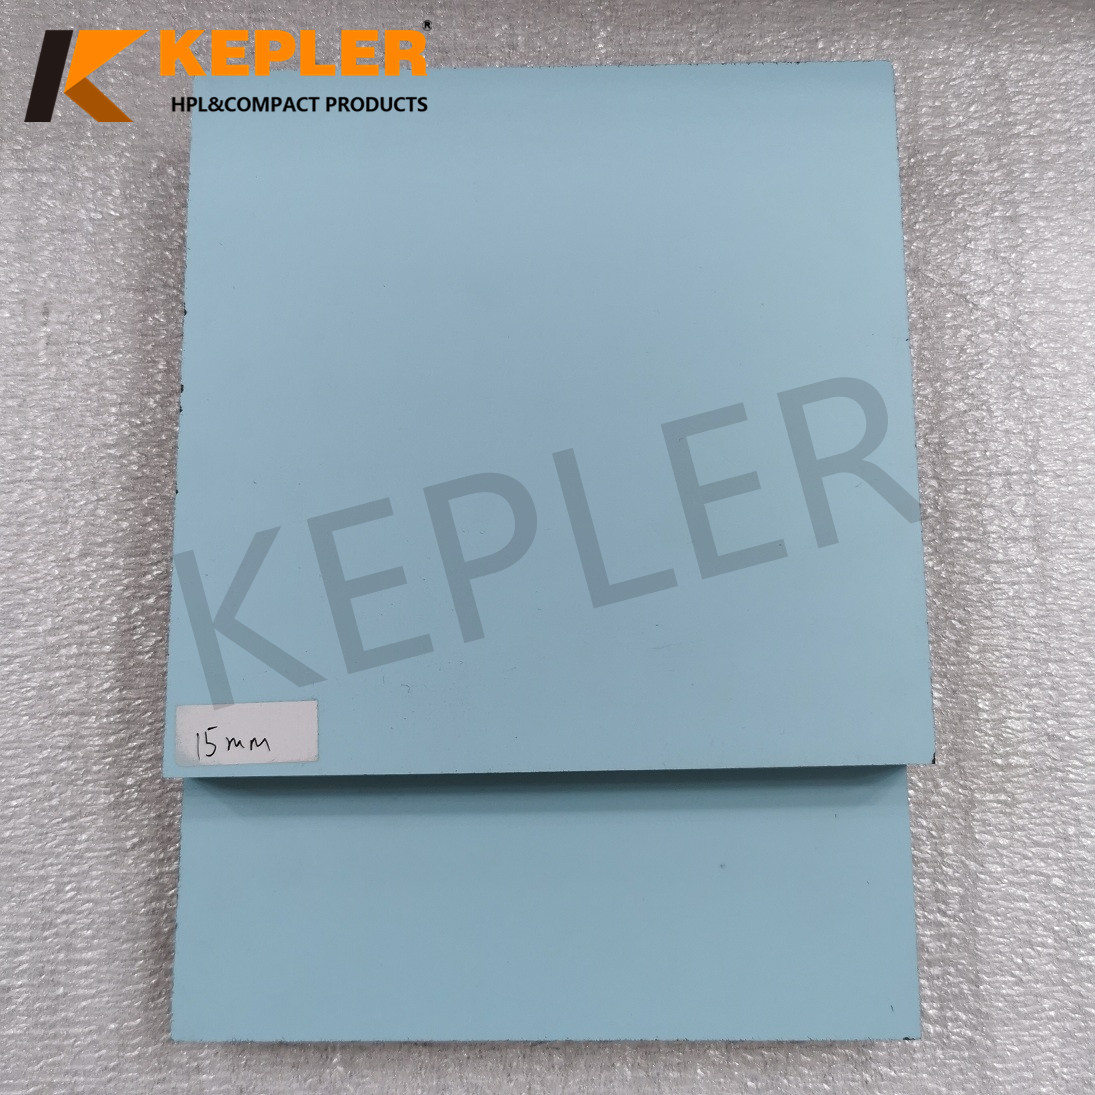 Kepler 15mm Solid Color Chemical Resistant HPL Compact Laminate Board